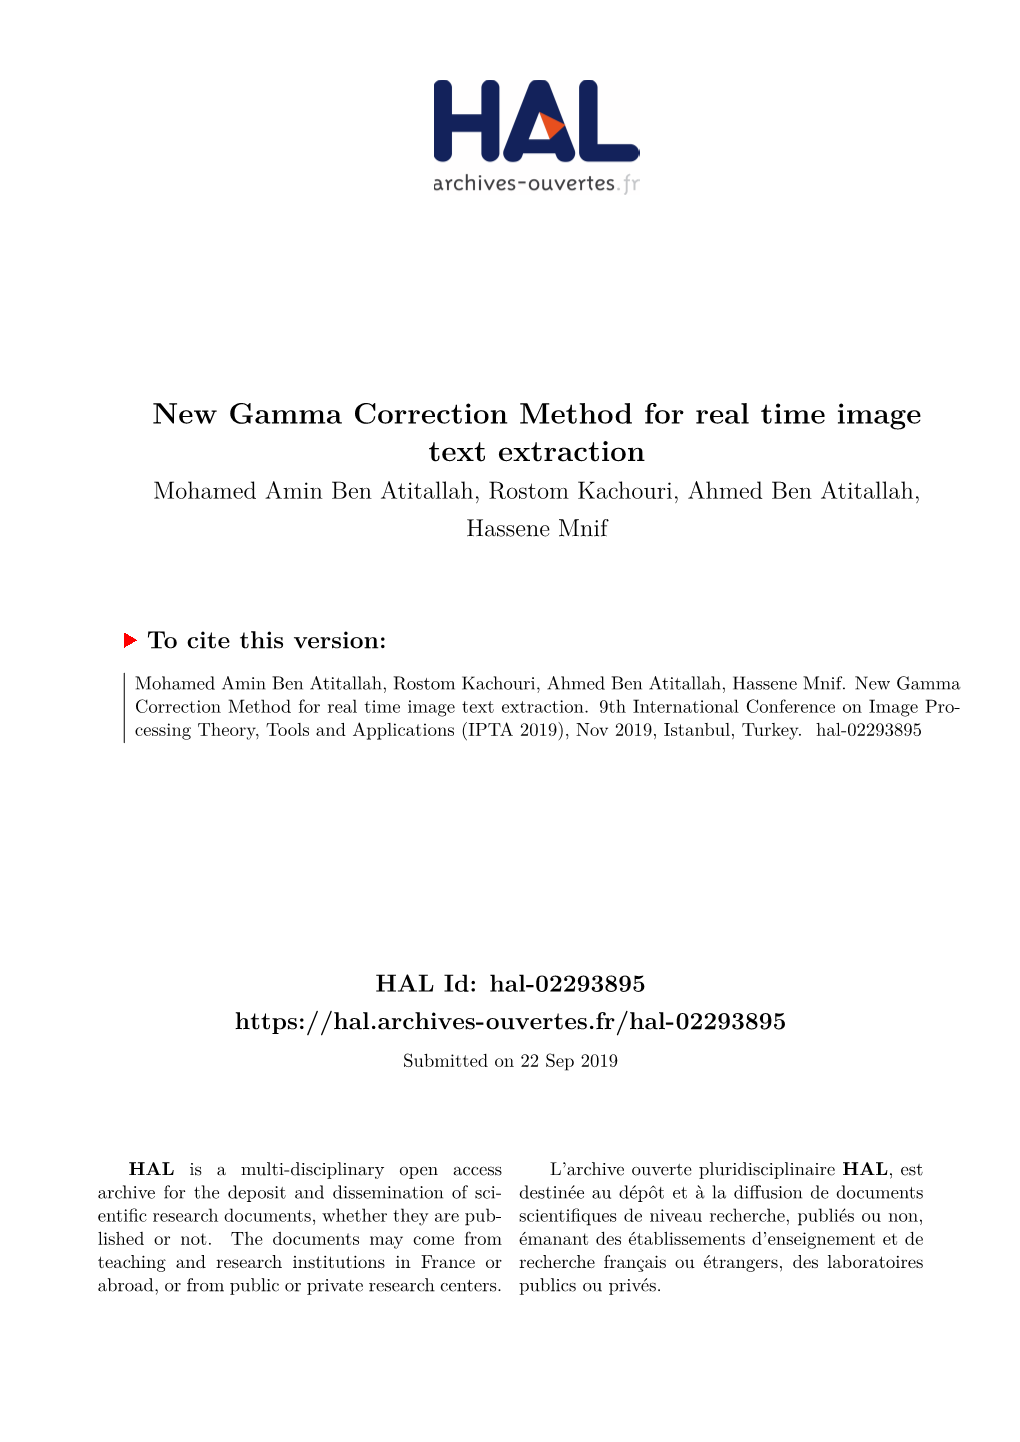 New Gamma Correction Method for Real Time Image Text Extraction Mohamed Amin Ben Atitallah, Rostom Kachouri, Ahmed Ben Atitallah, Hassene Mnif